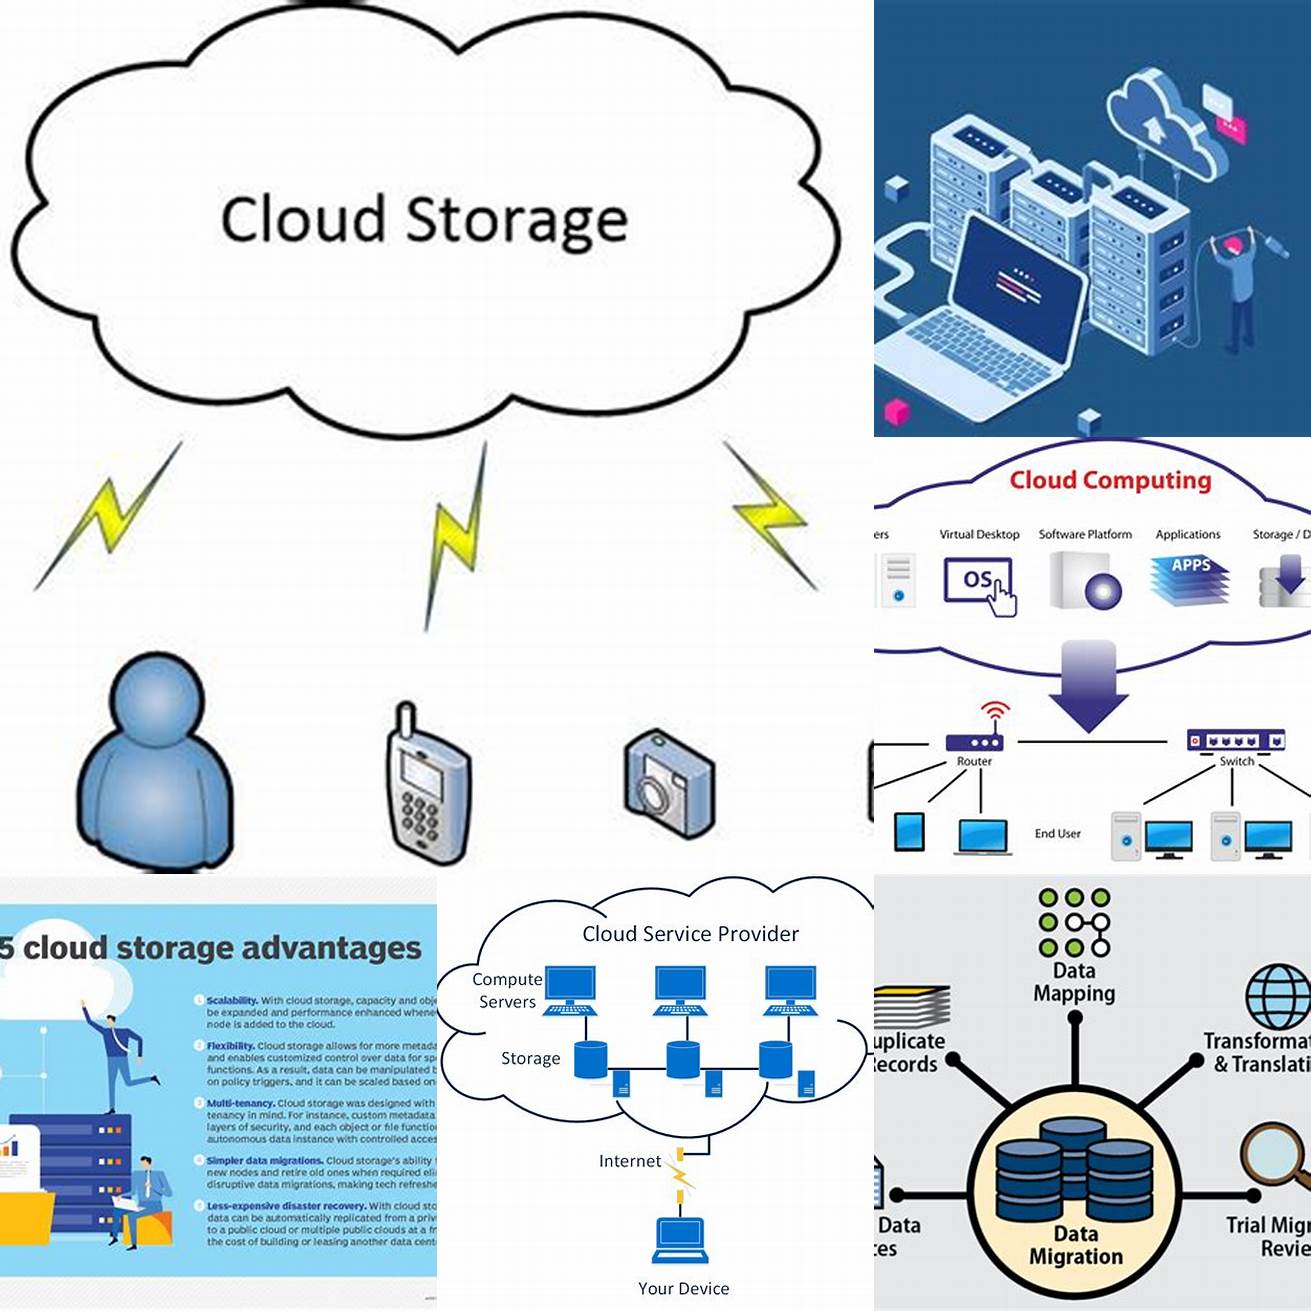 3 Cloud Storage